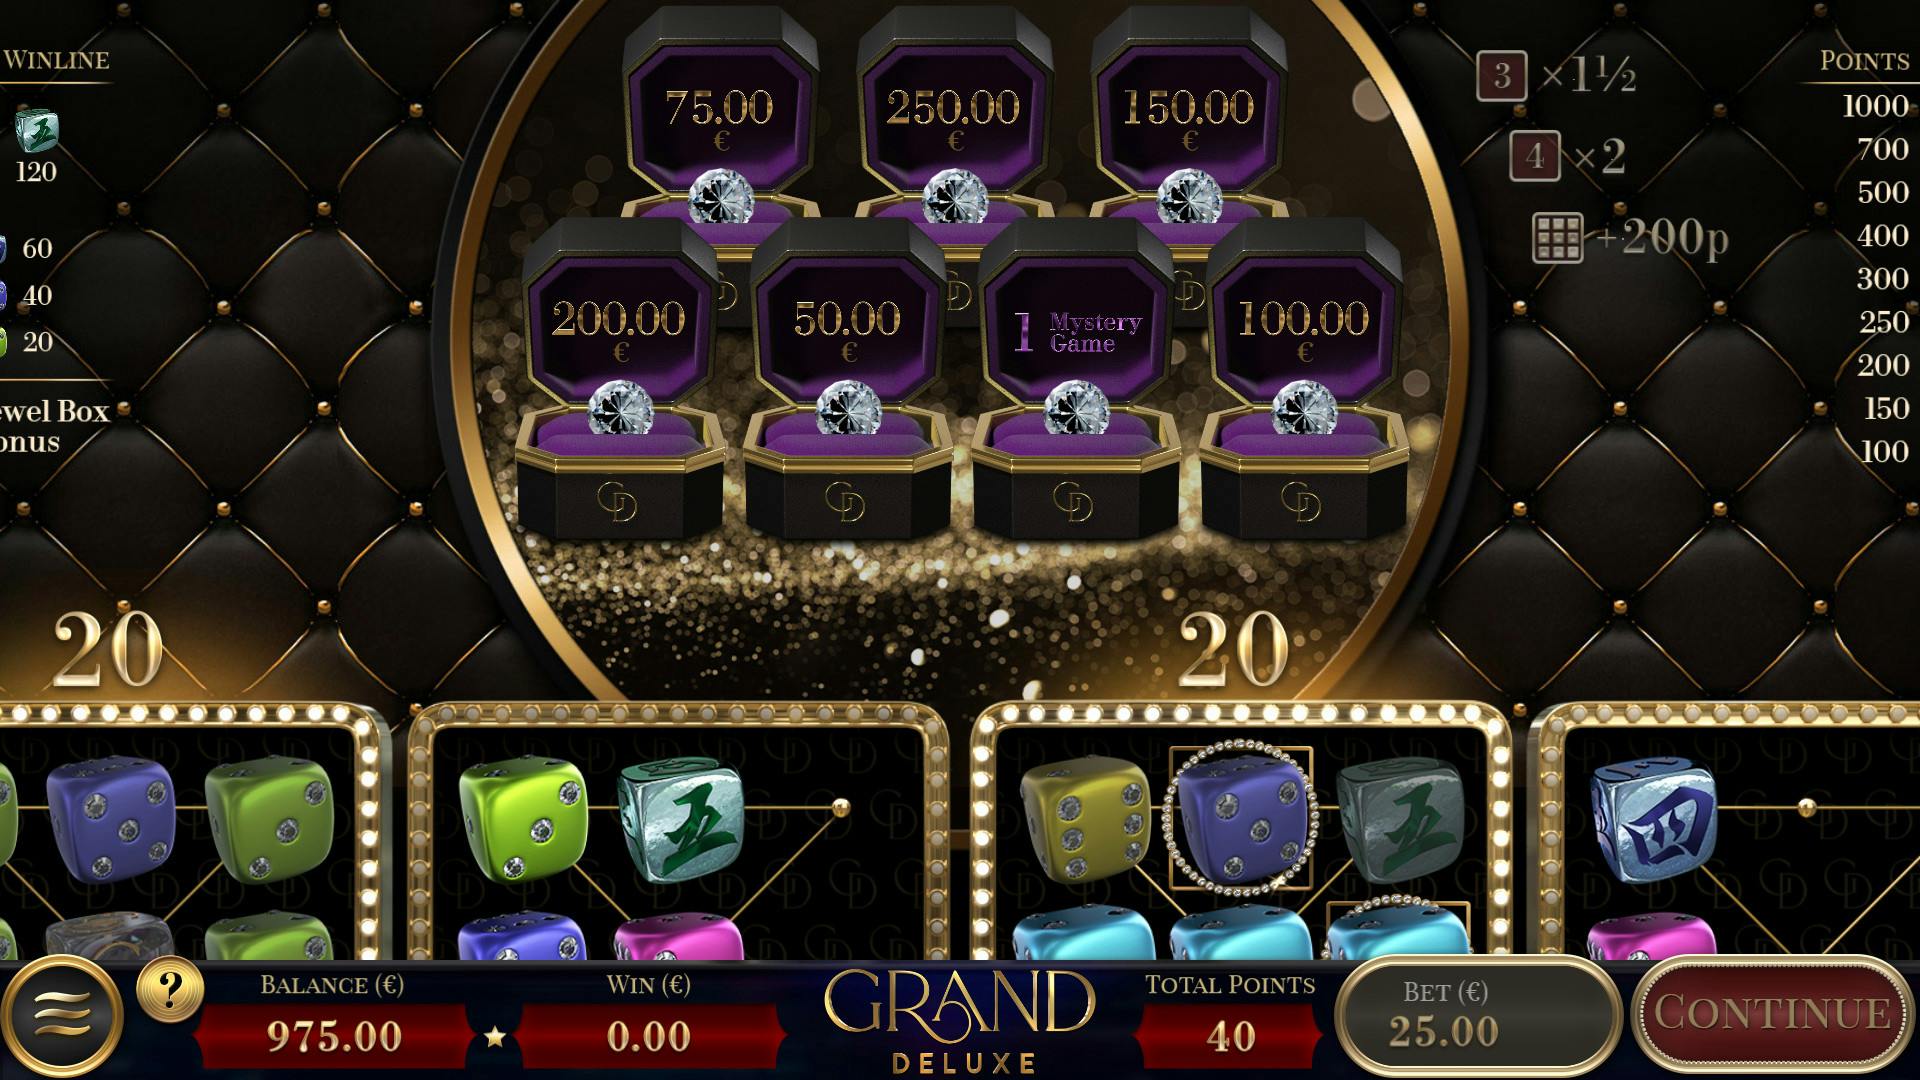 Airdice Grand Deluxe Dice game, collect the diamonds!